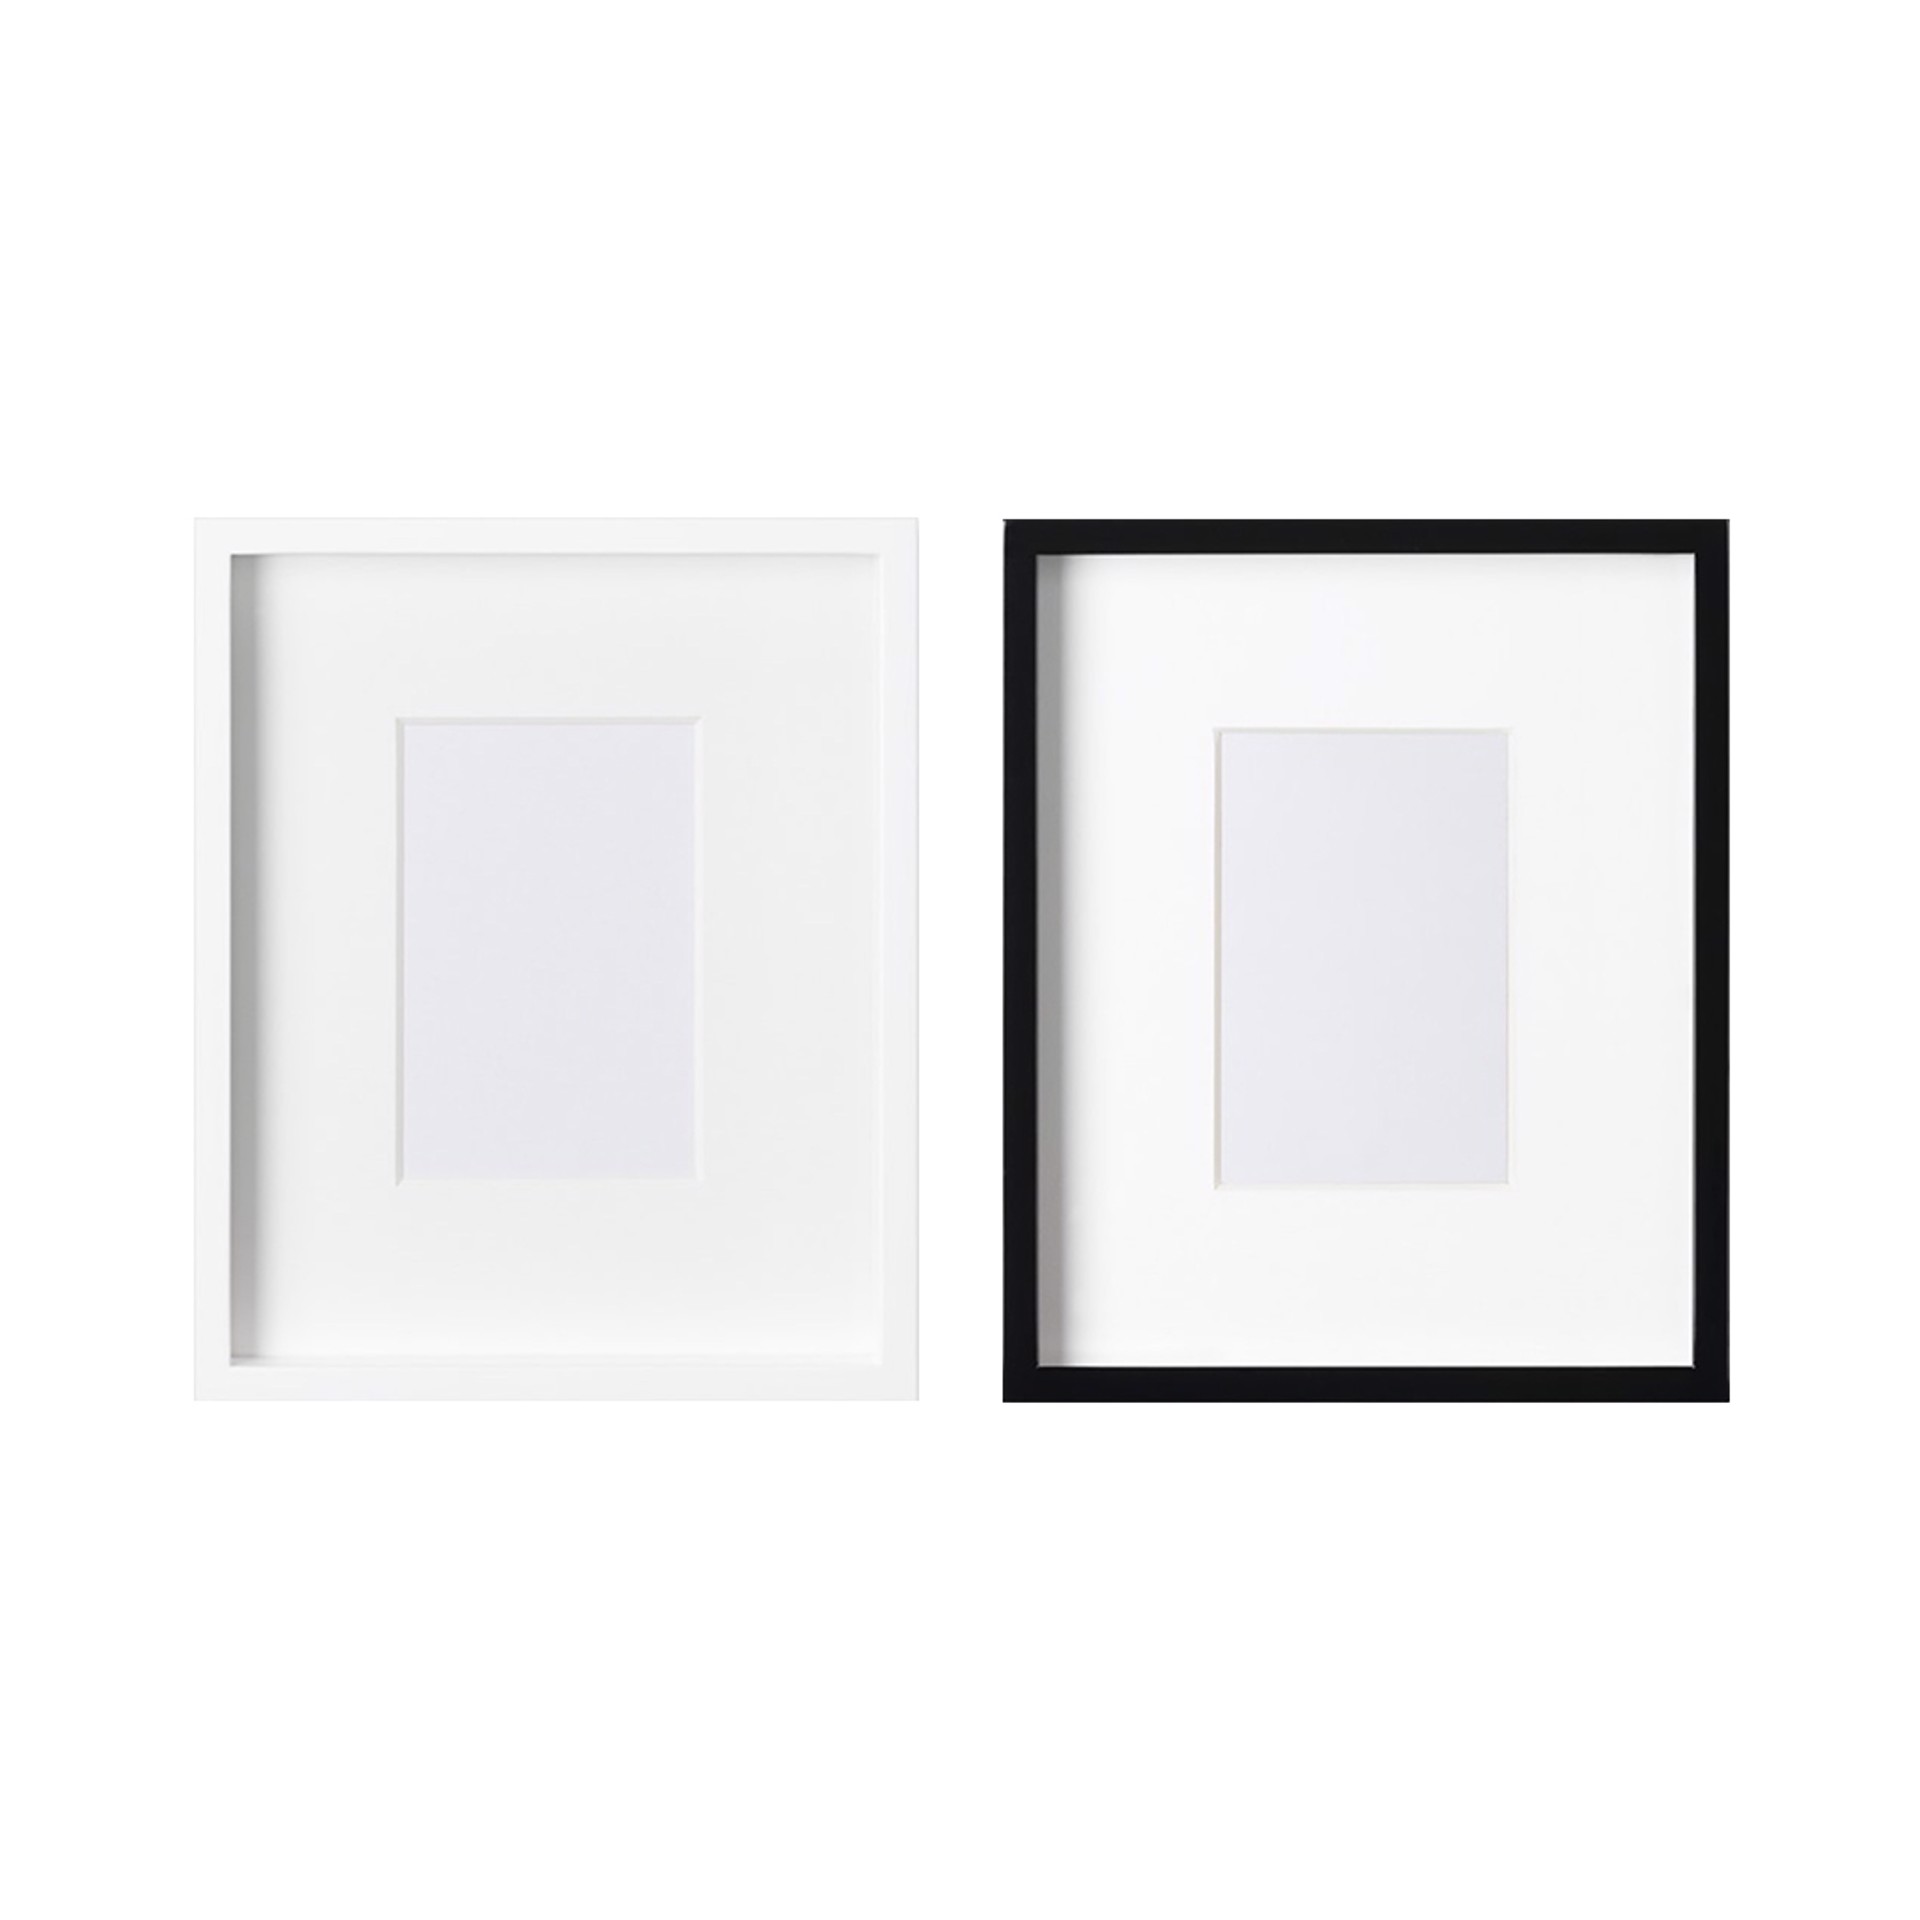 White shadow box frame (48.875" x 35.25")